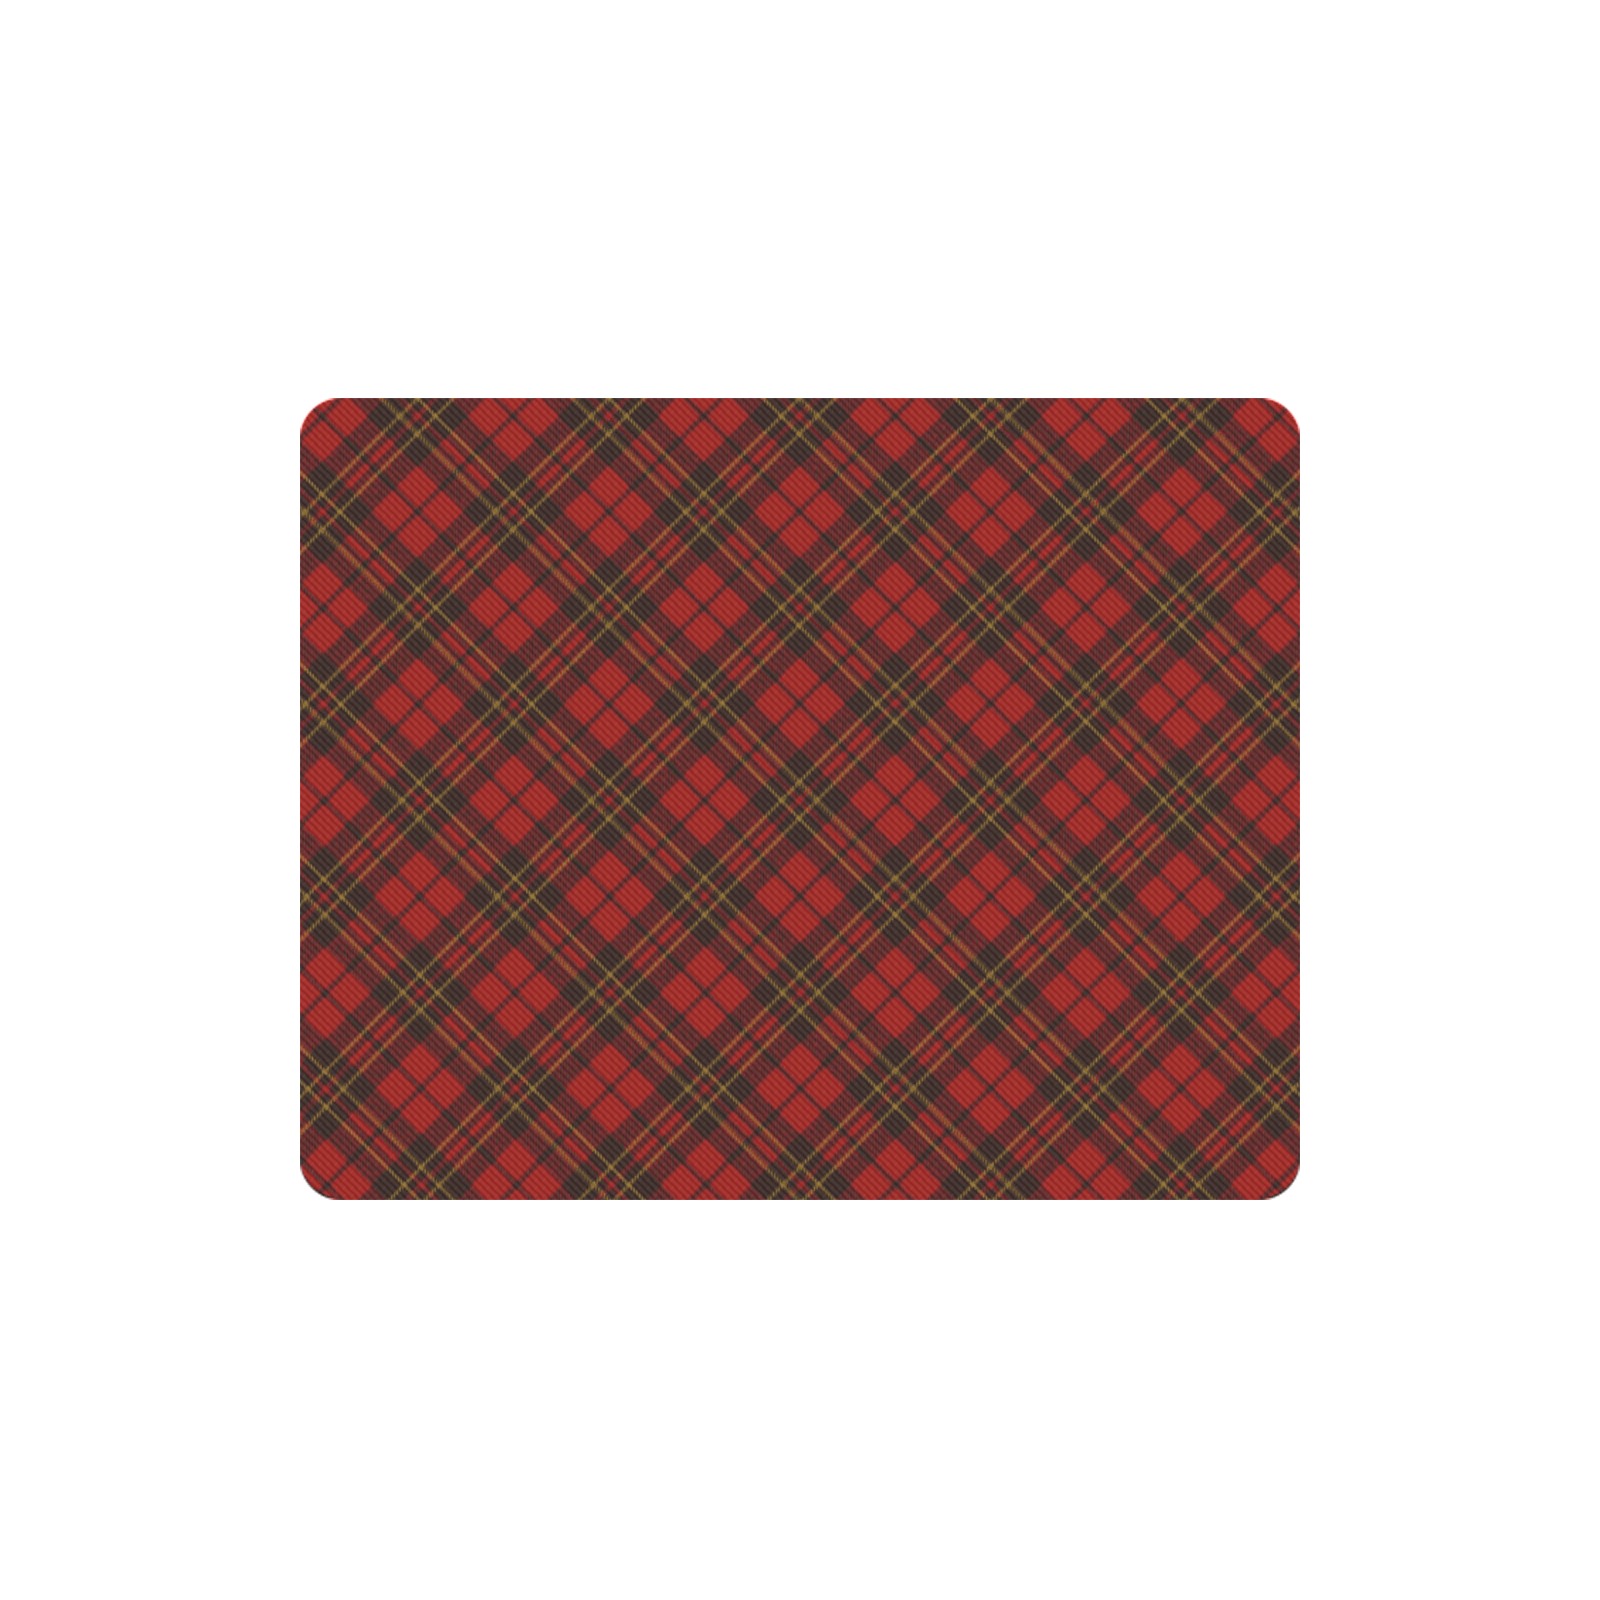 Red tartan plaid winter Christmas pattern holidays Rectangle Mousepad